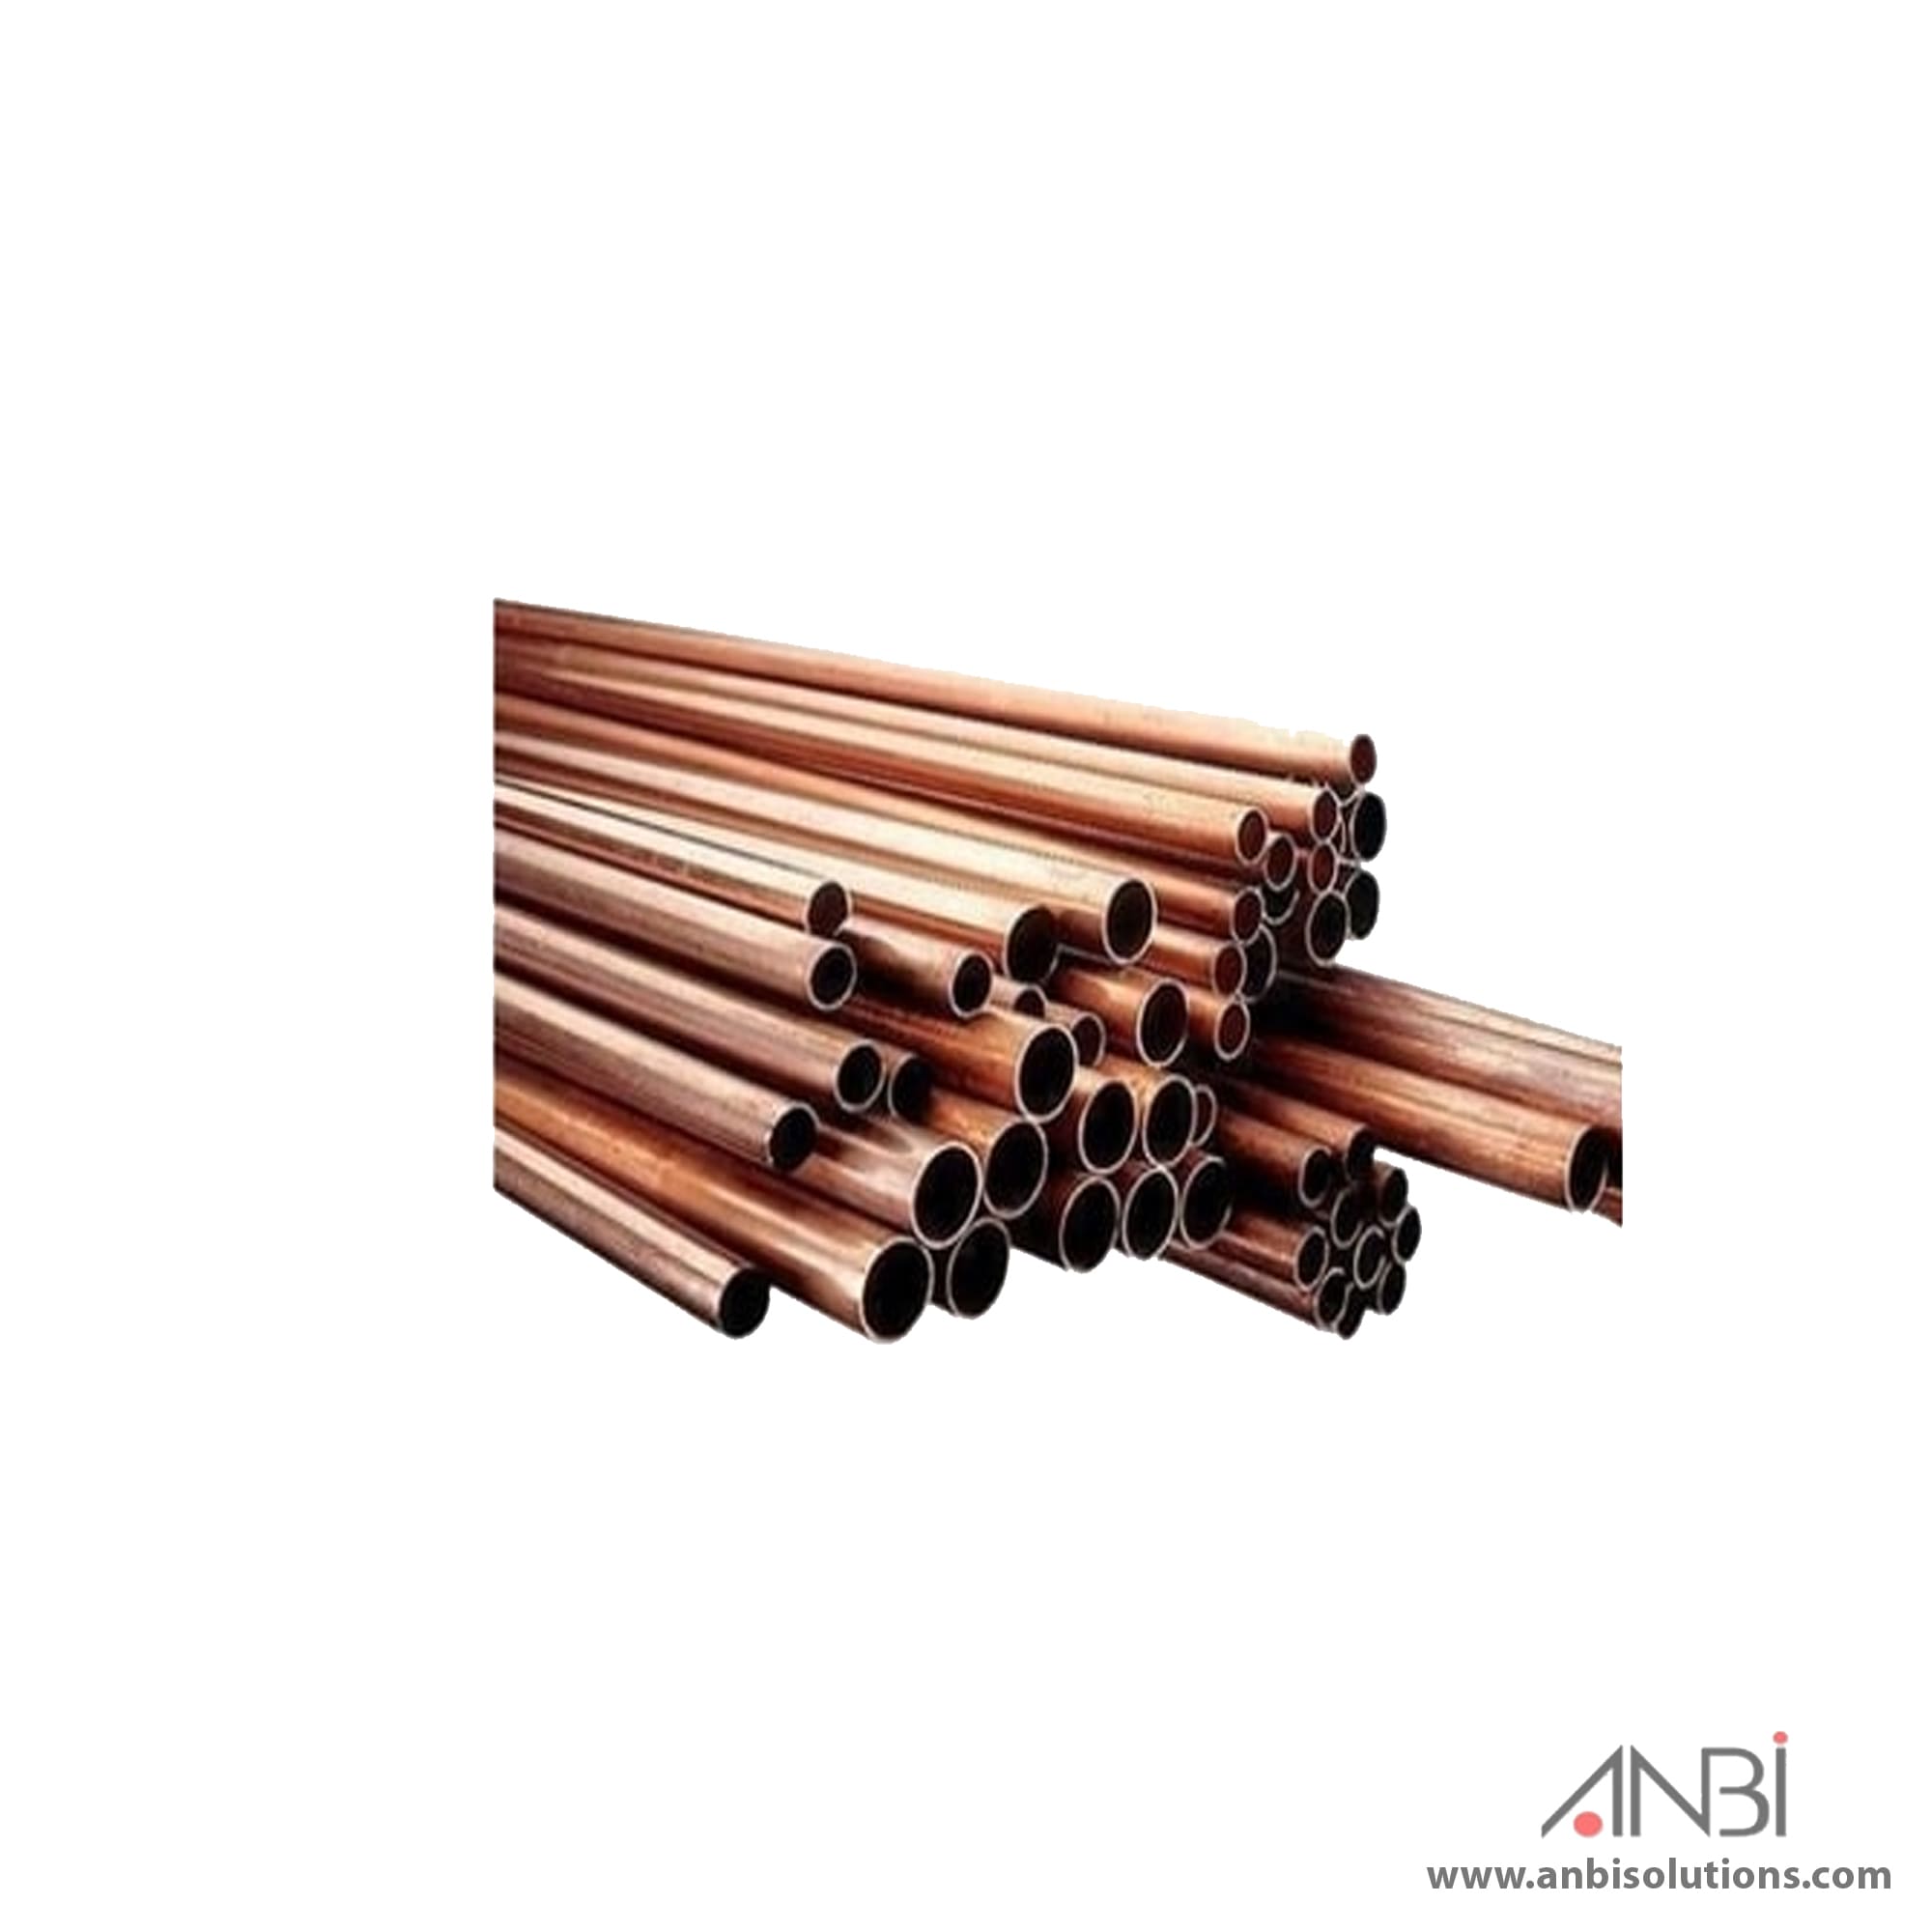 Cambridge Lee 20-ft HVAC Copper Pipe ASTM B280 | ANBI Online